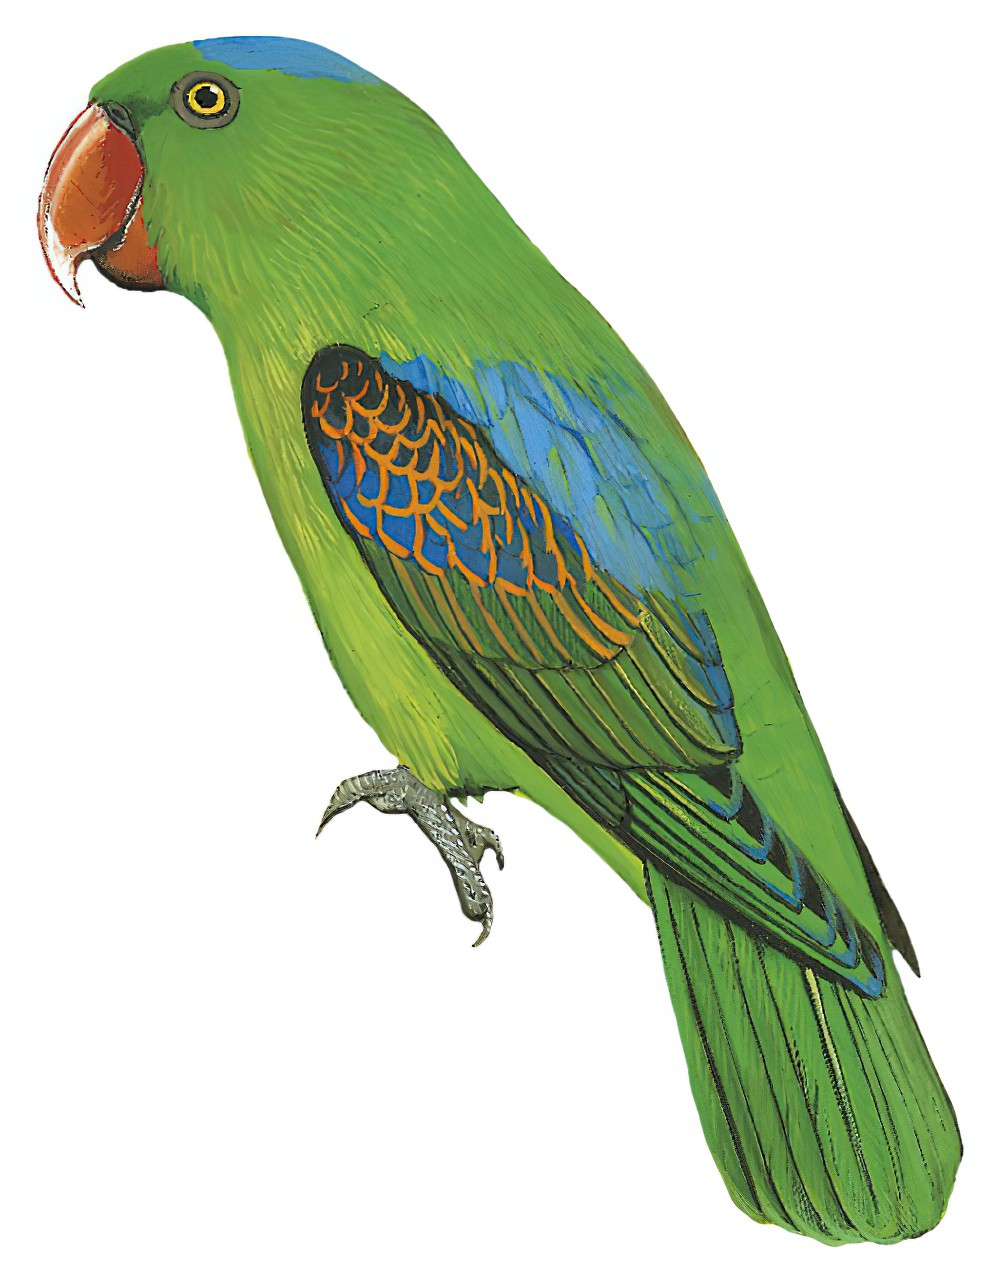 Blue-naped Parrot / Tanygnathus lucionensis